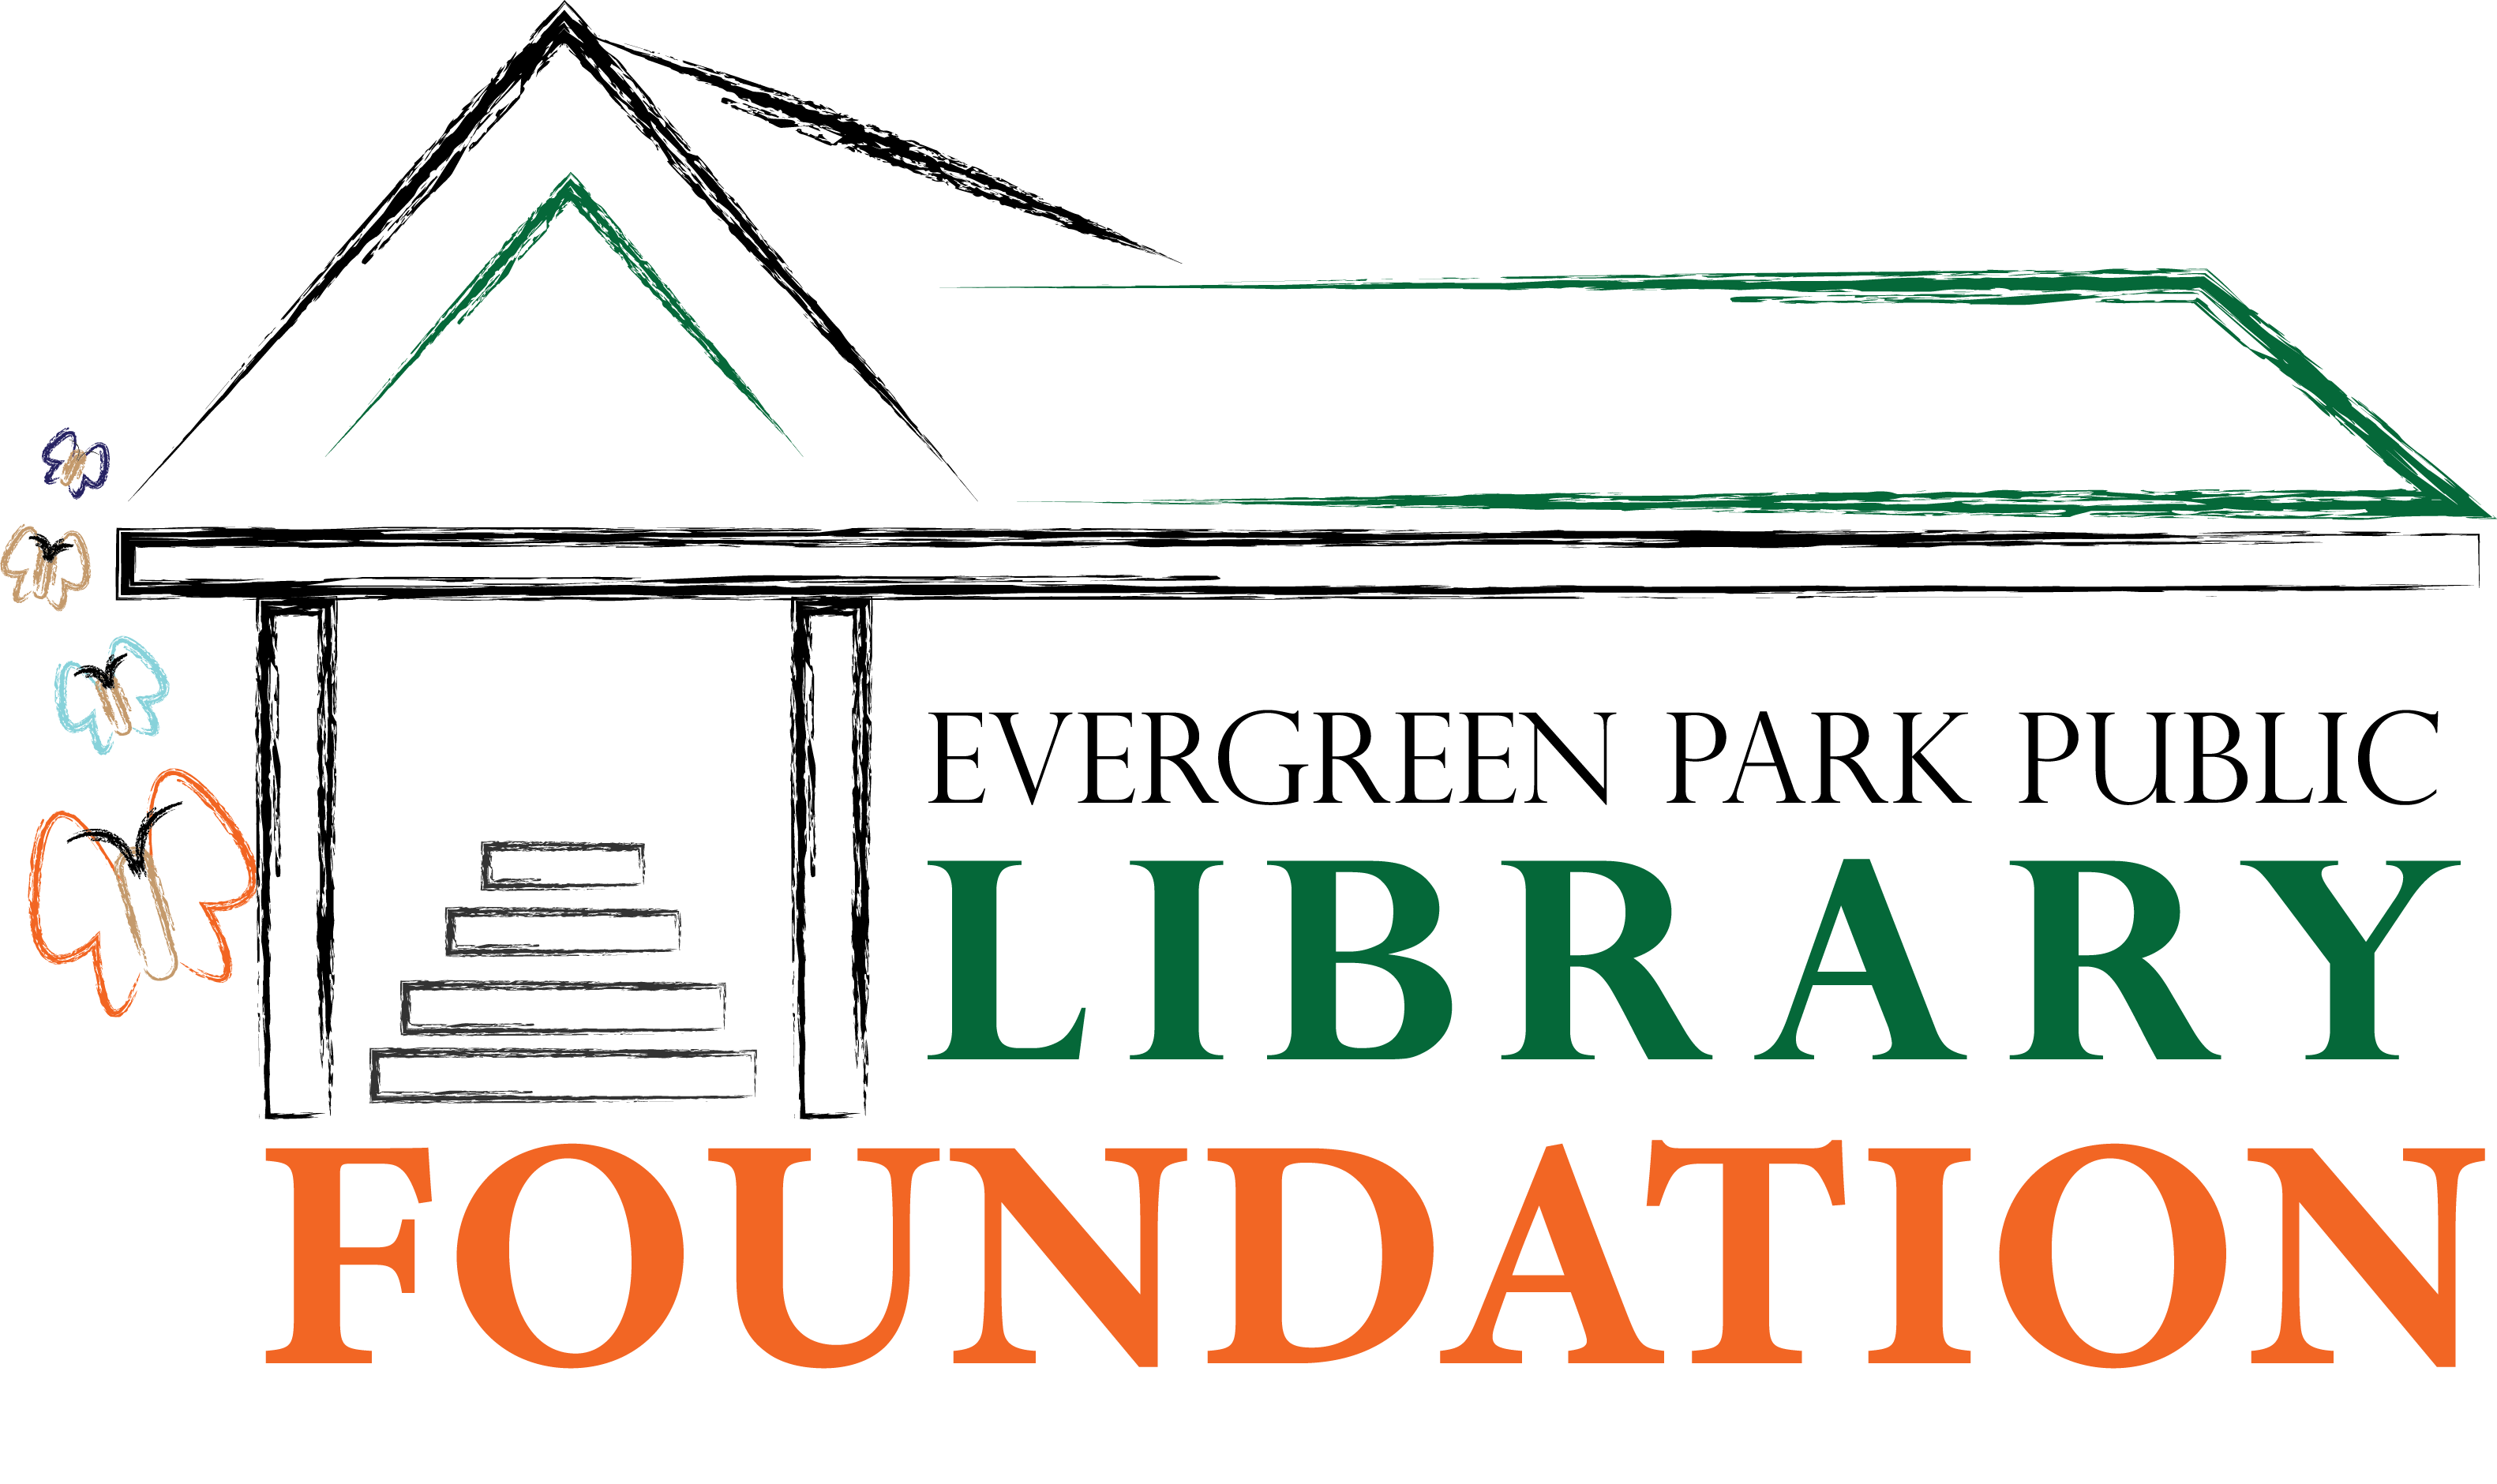 Library Foundation Logo